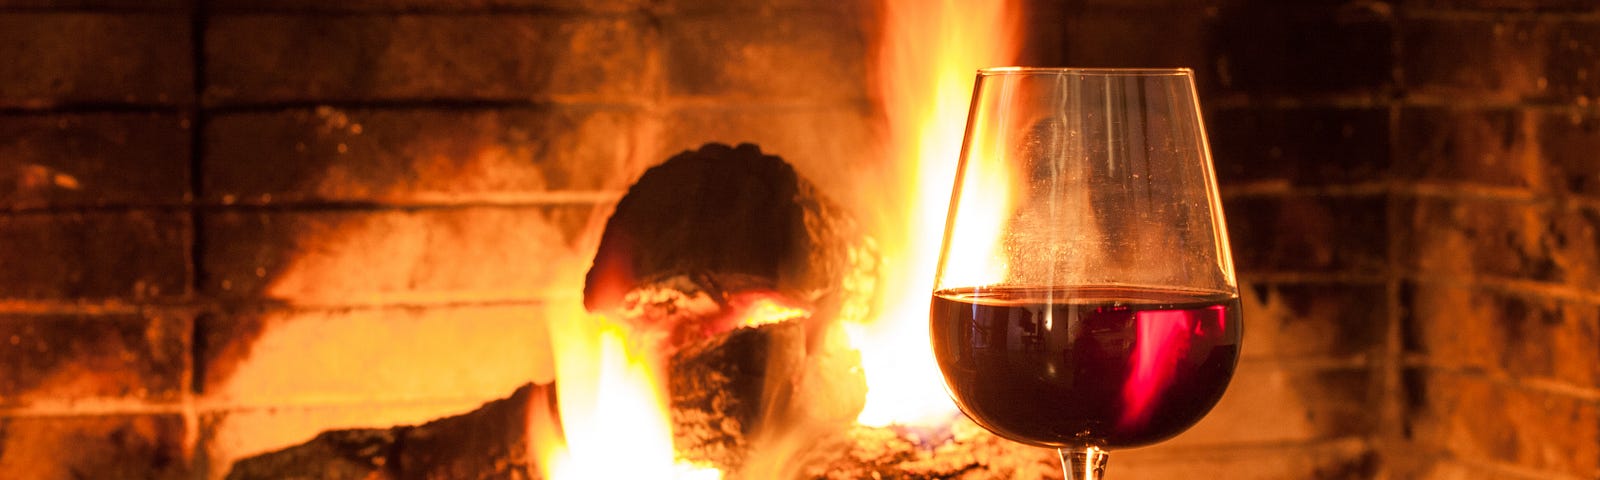 A wine glass near a log fire